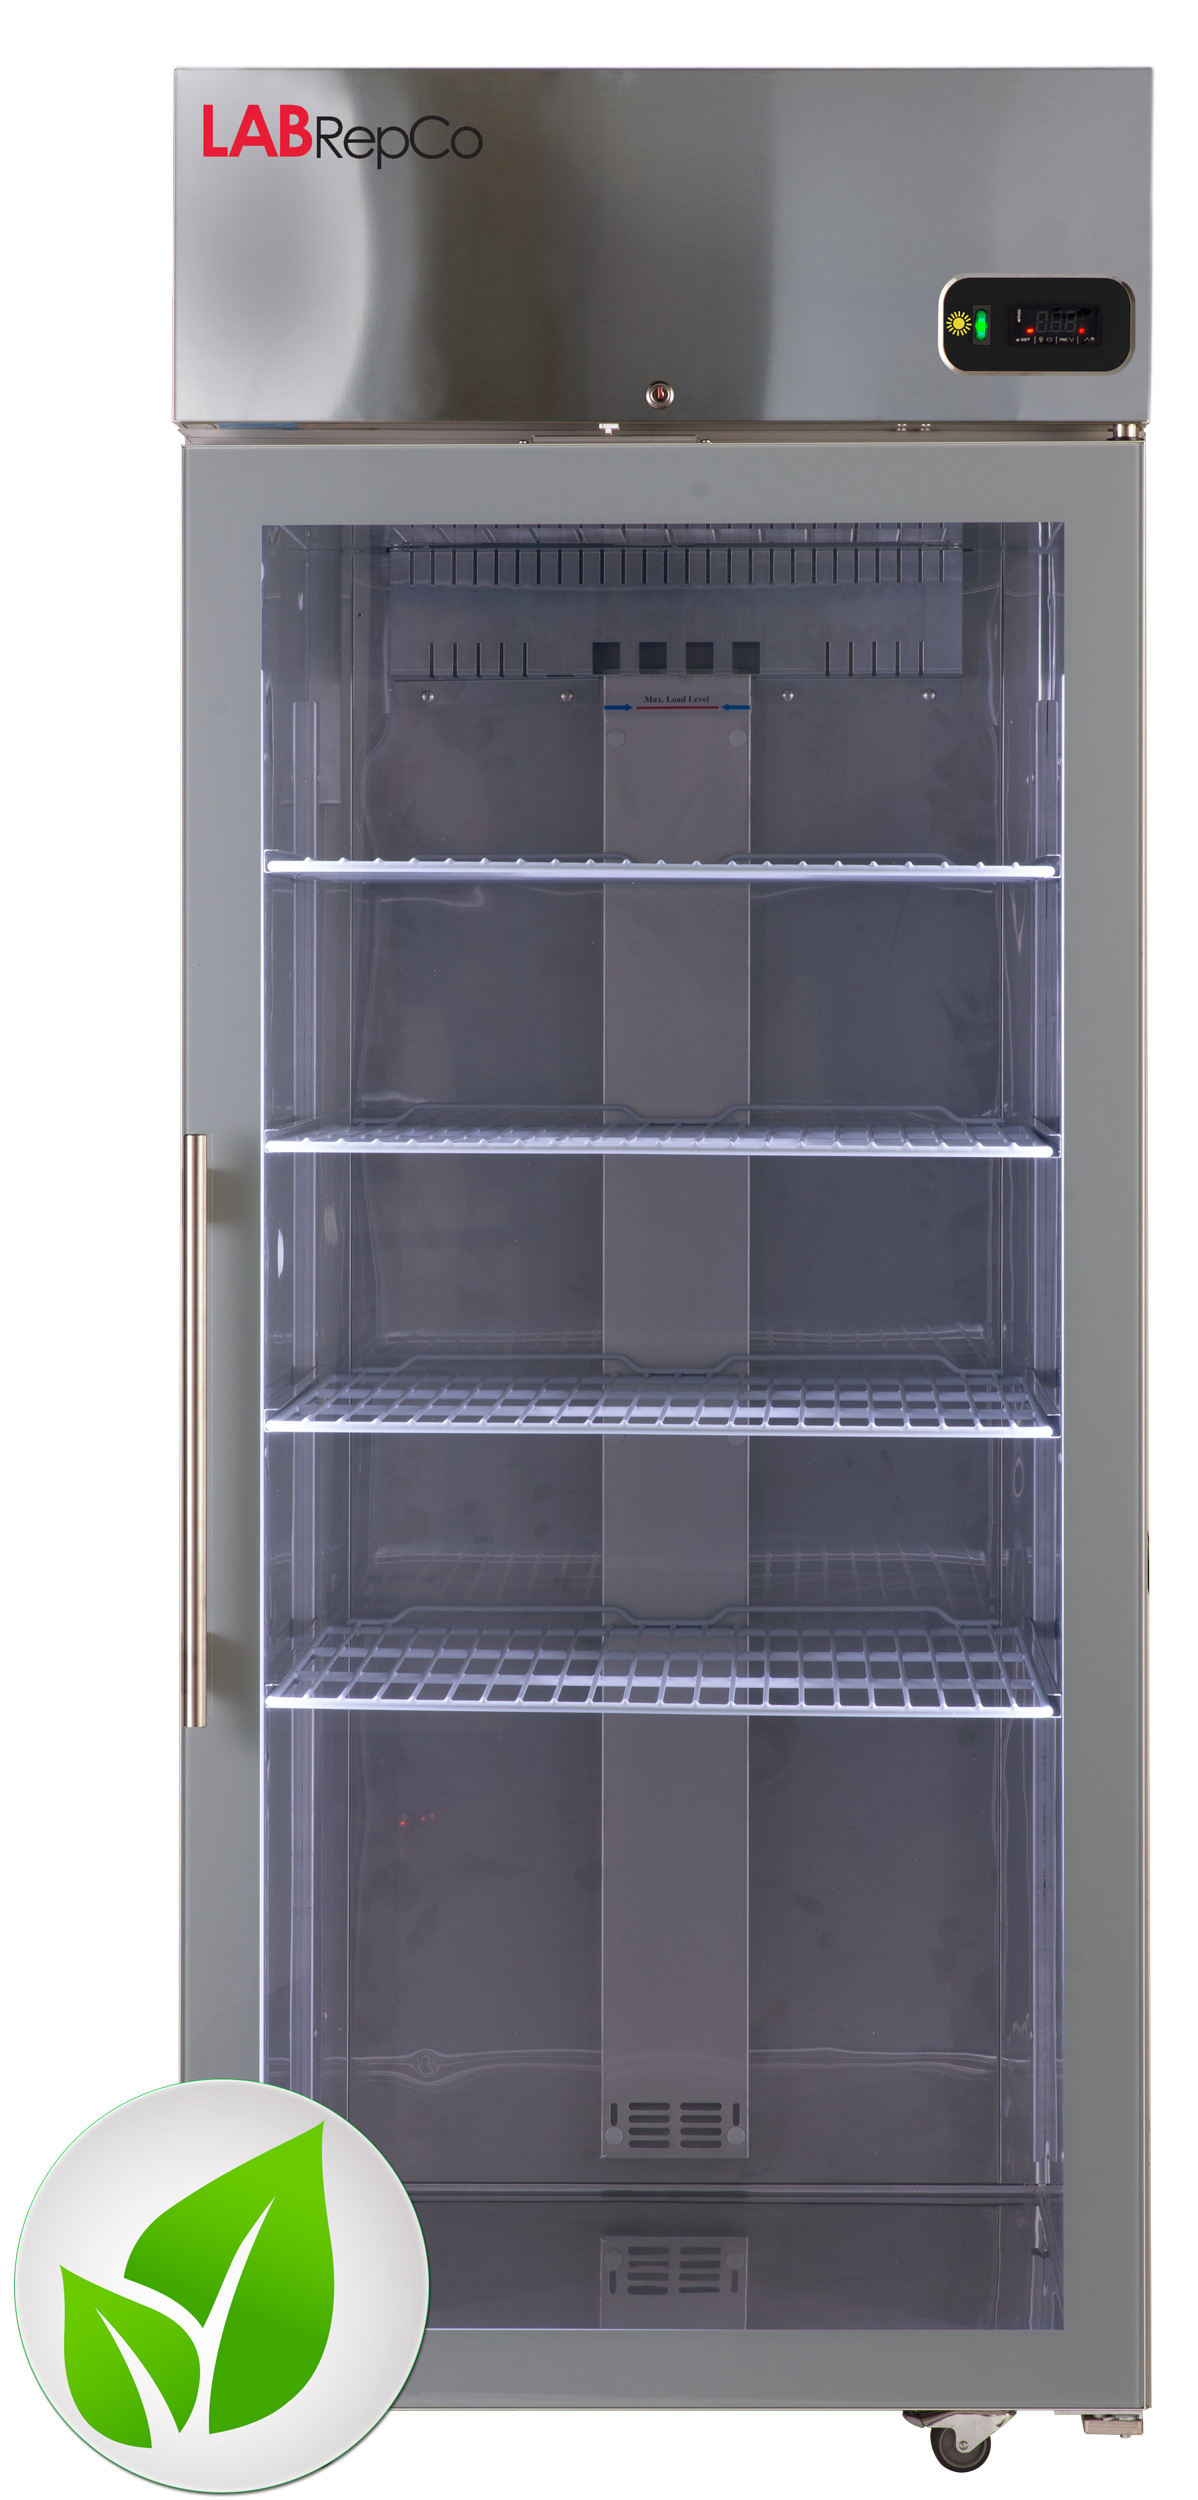 Futura Ld Series 25 Cu Ft Laboratory Refrigerator Stainless Steel Glass Door Labrepco Llc